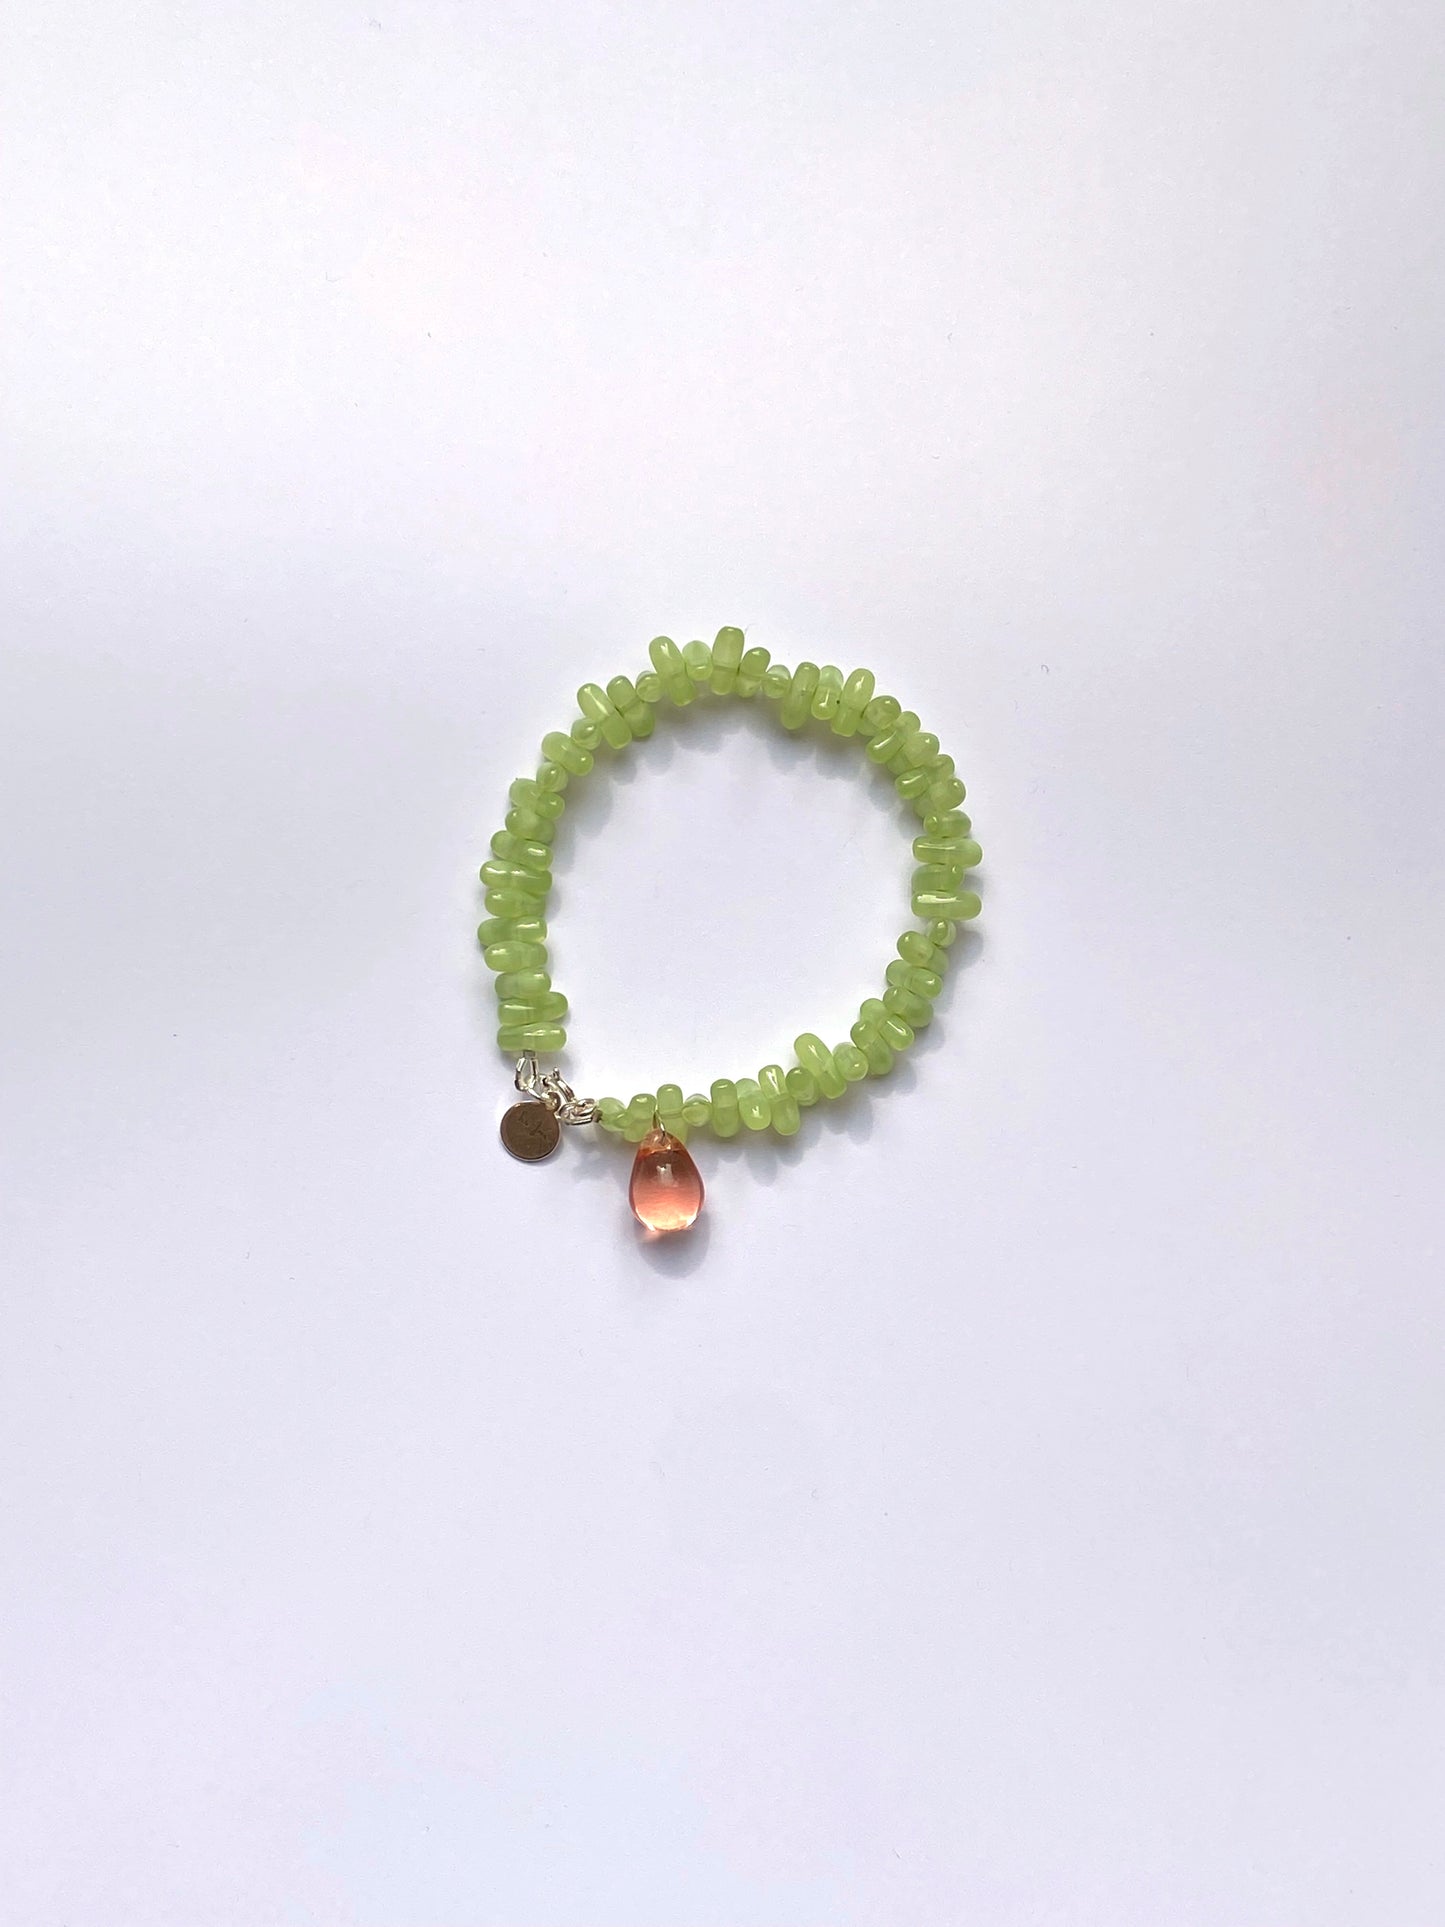 Corail bracelet - Green / pink